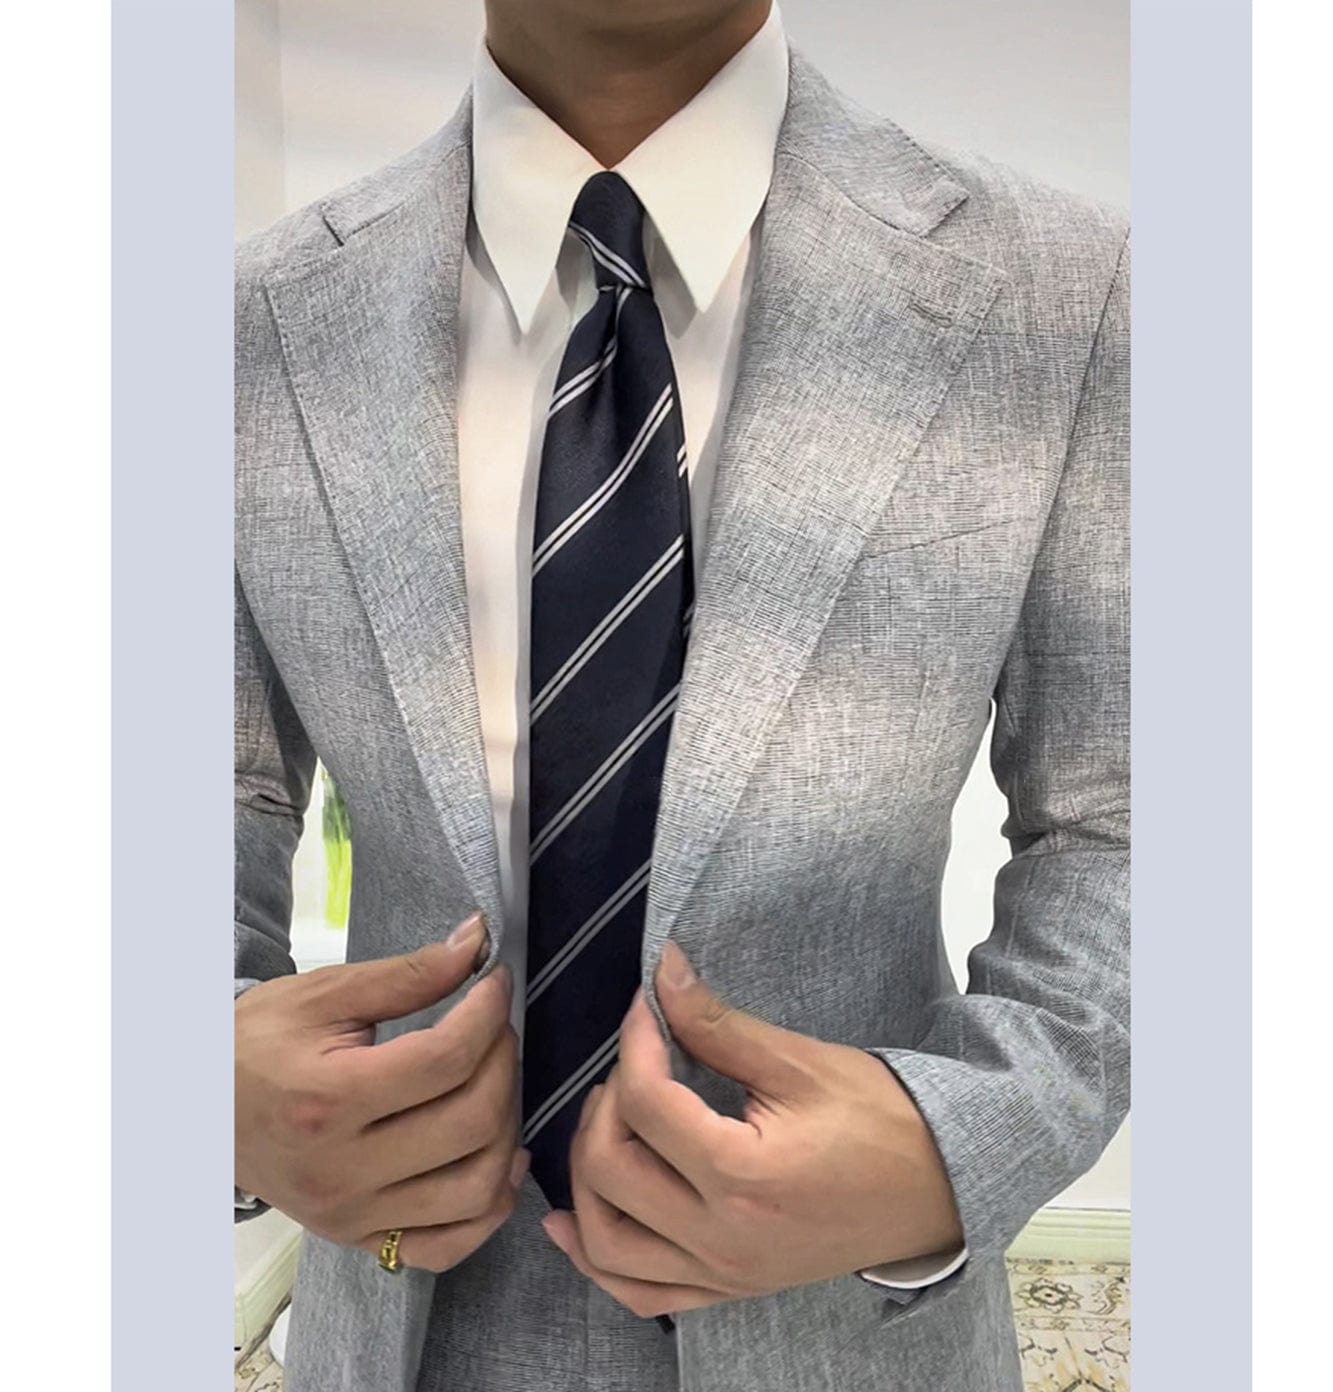 ceehuteey Linen Suits For Men Business 2 Piece Fit Casual Notch Lapel Summer Grooms (Blazer+Pants)